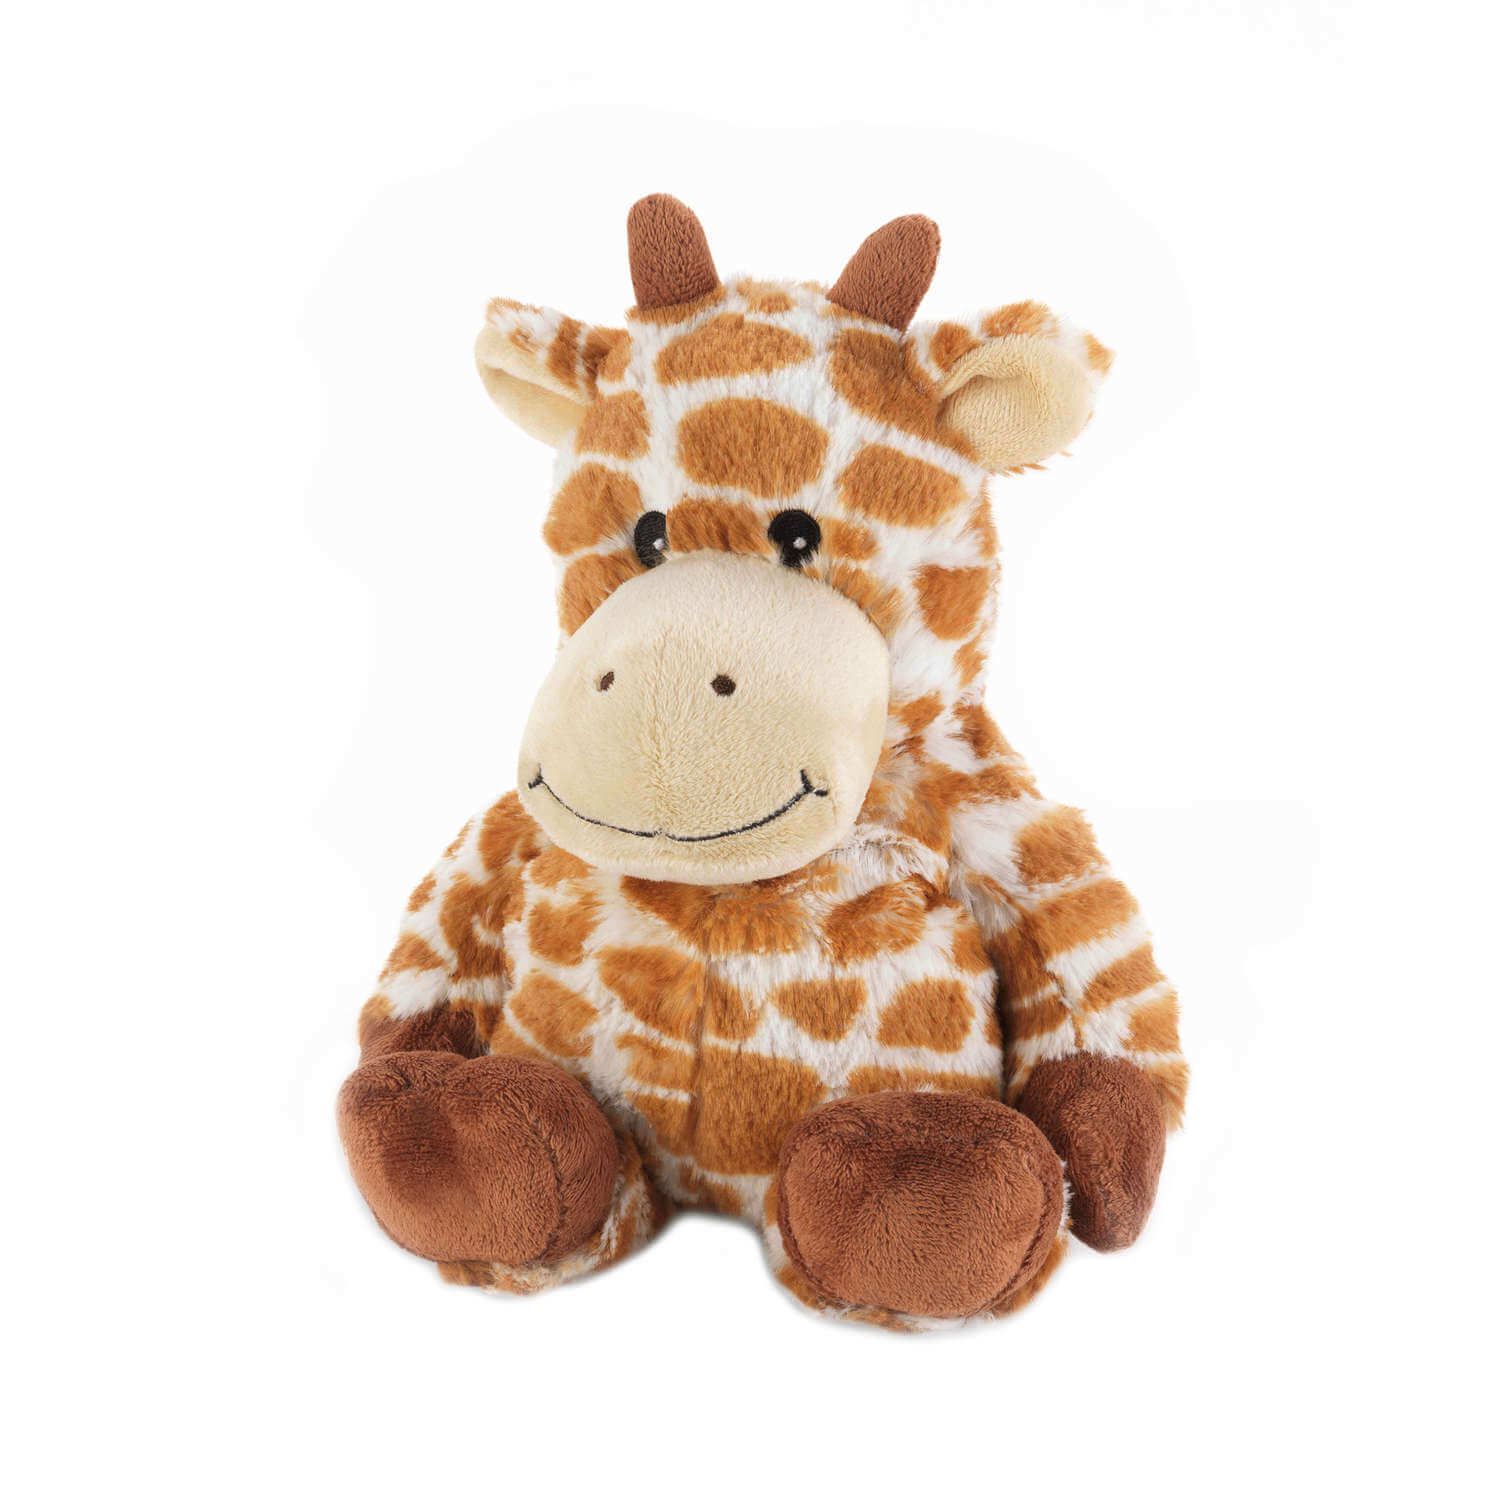 Warmies Plush Giraffe Microwavable 1 Shaws Department Stores